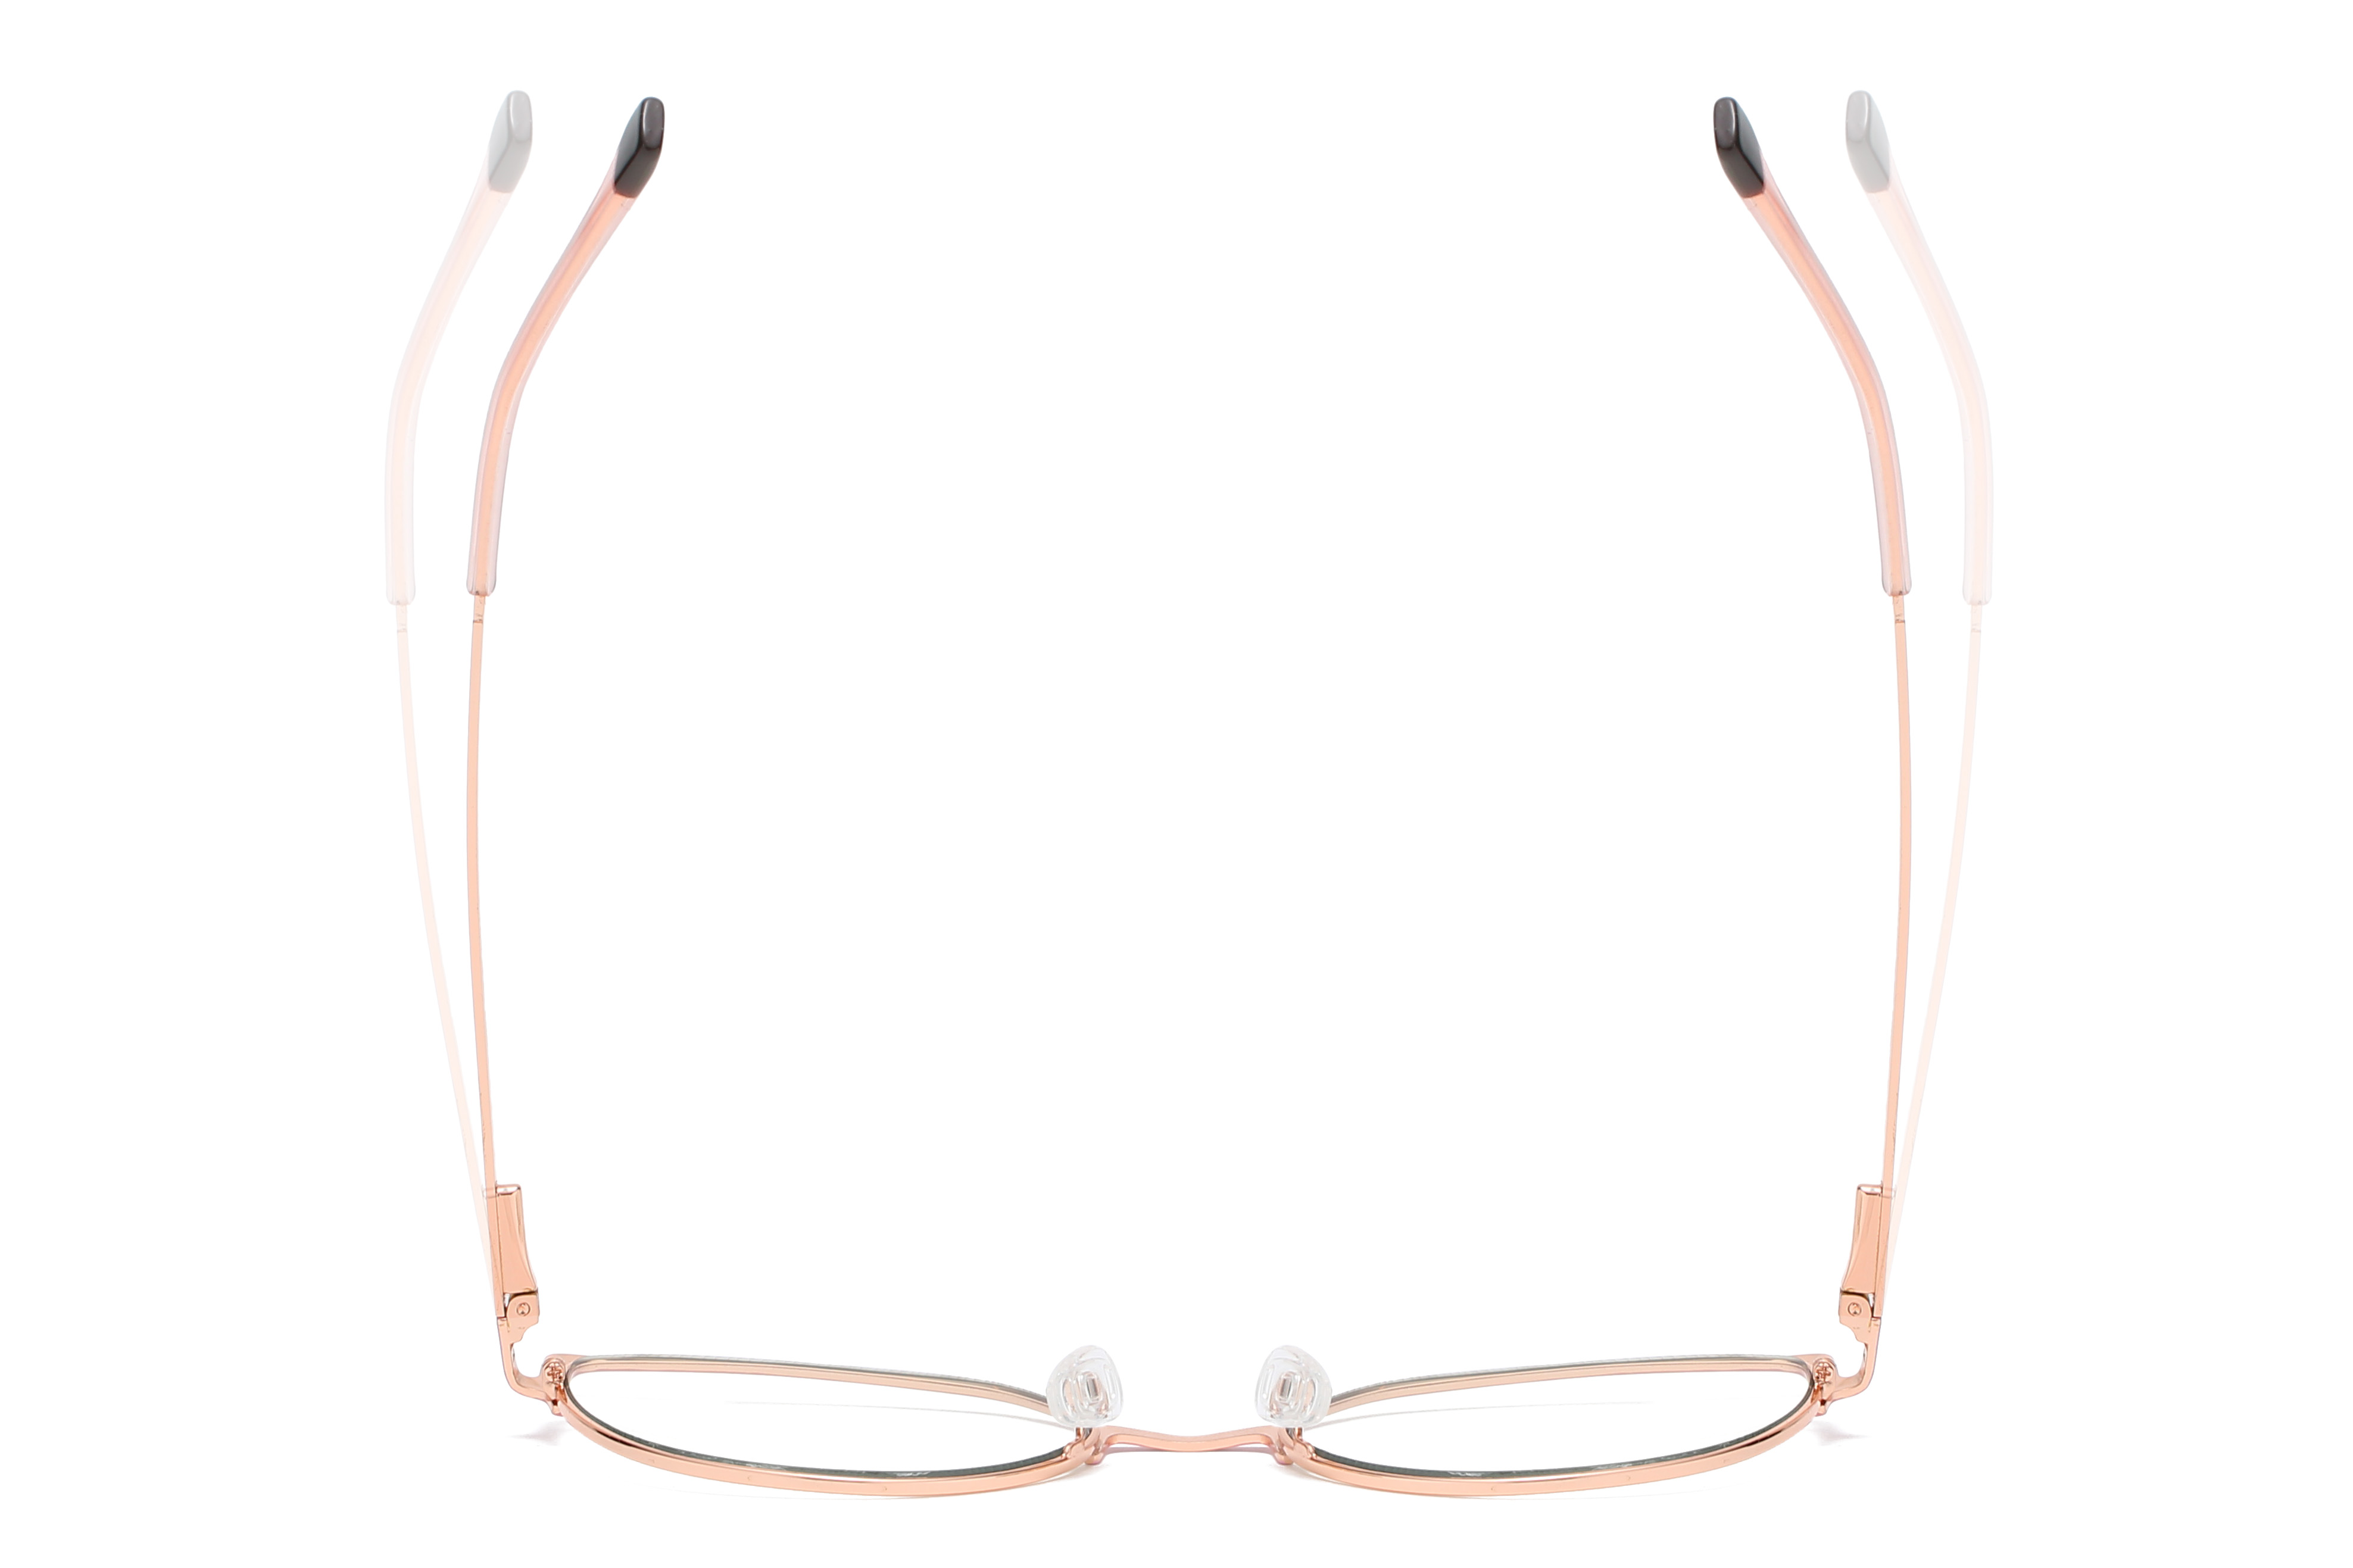 INS HOT Womans Fashion Optical frame Cat Eye  Eyeglasses Spring Hinge